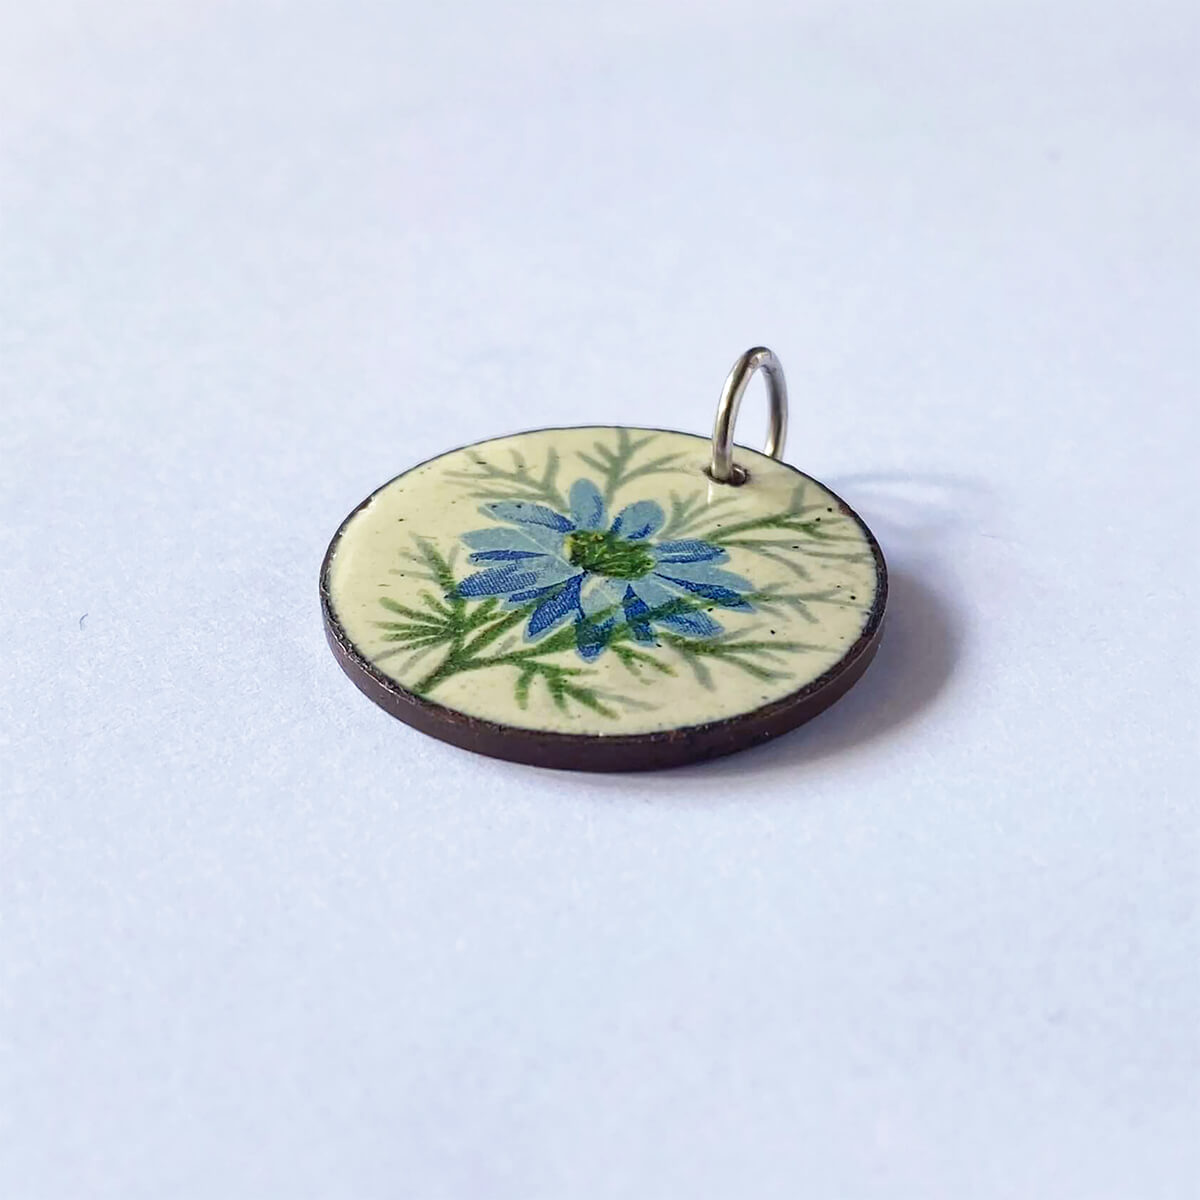 Vintage 1950s British coin charm Halfpenny Queen Elizabeth with enamel blue nigella flowers pendant from Charmarama